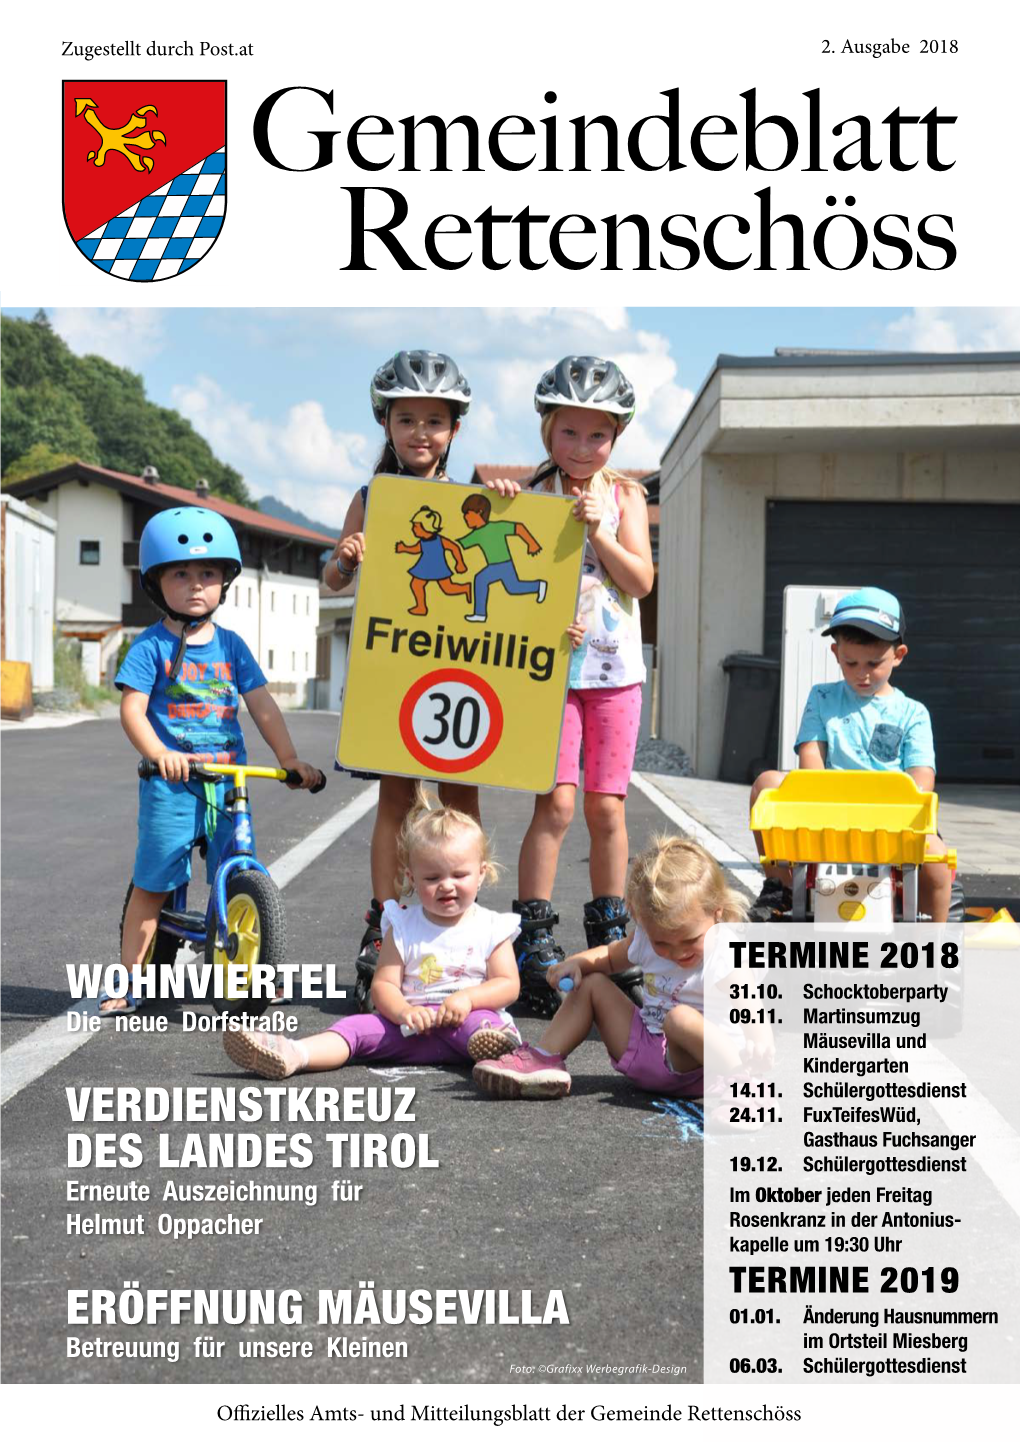 Gemeindeblatt Rettenschöss